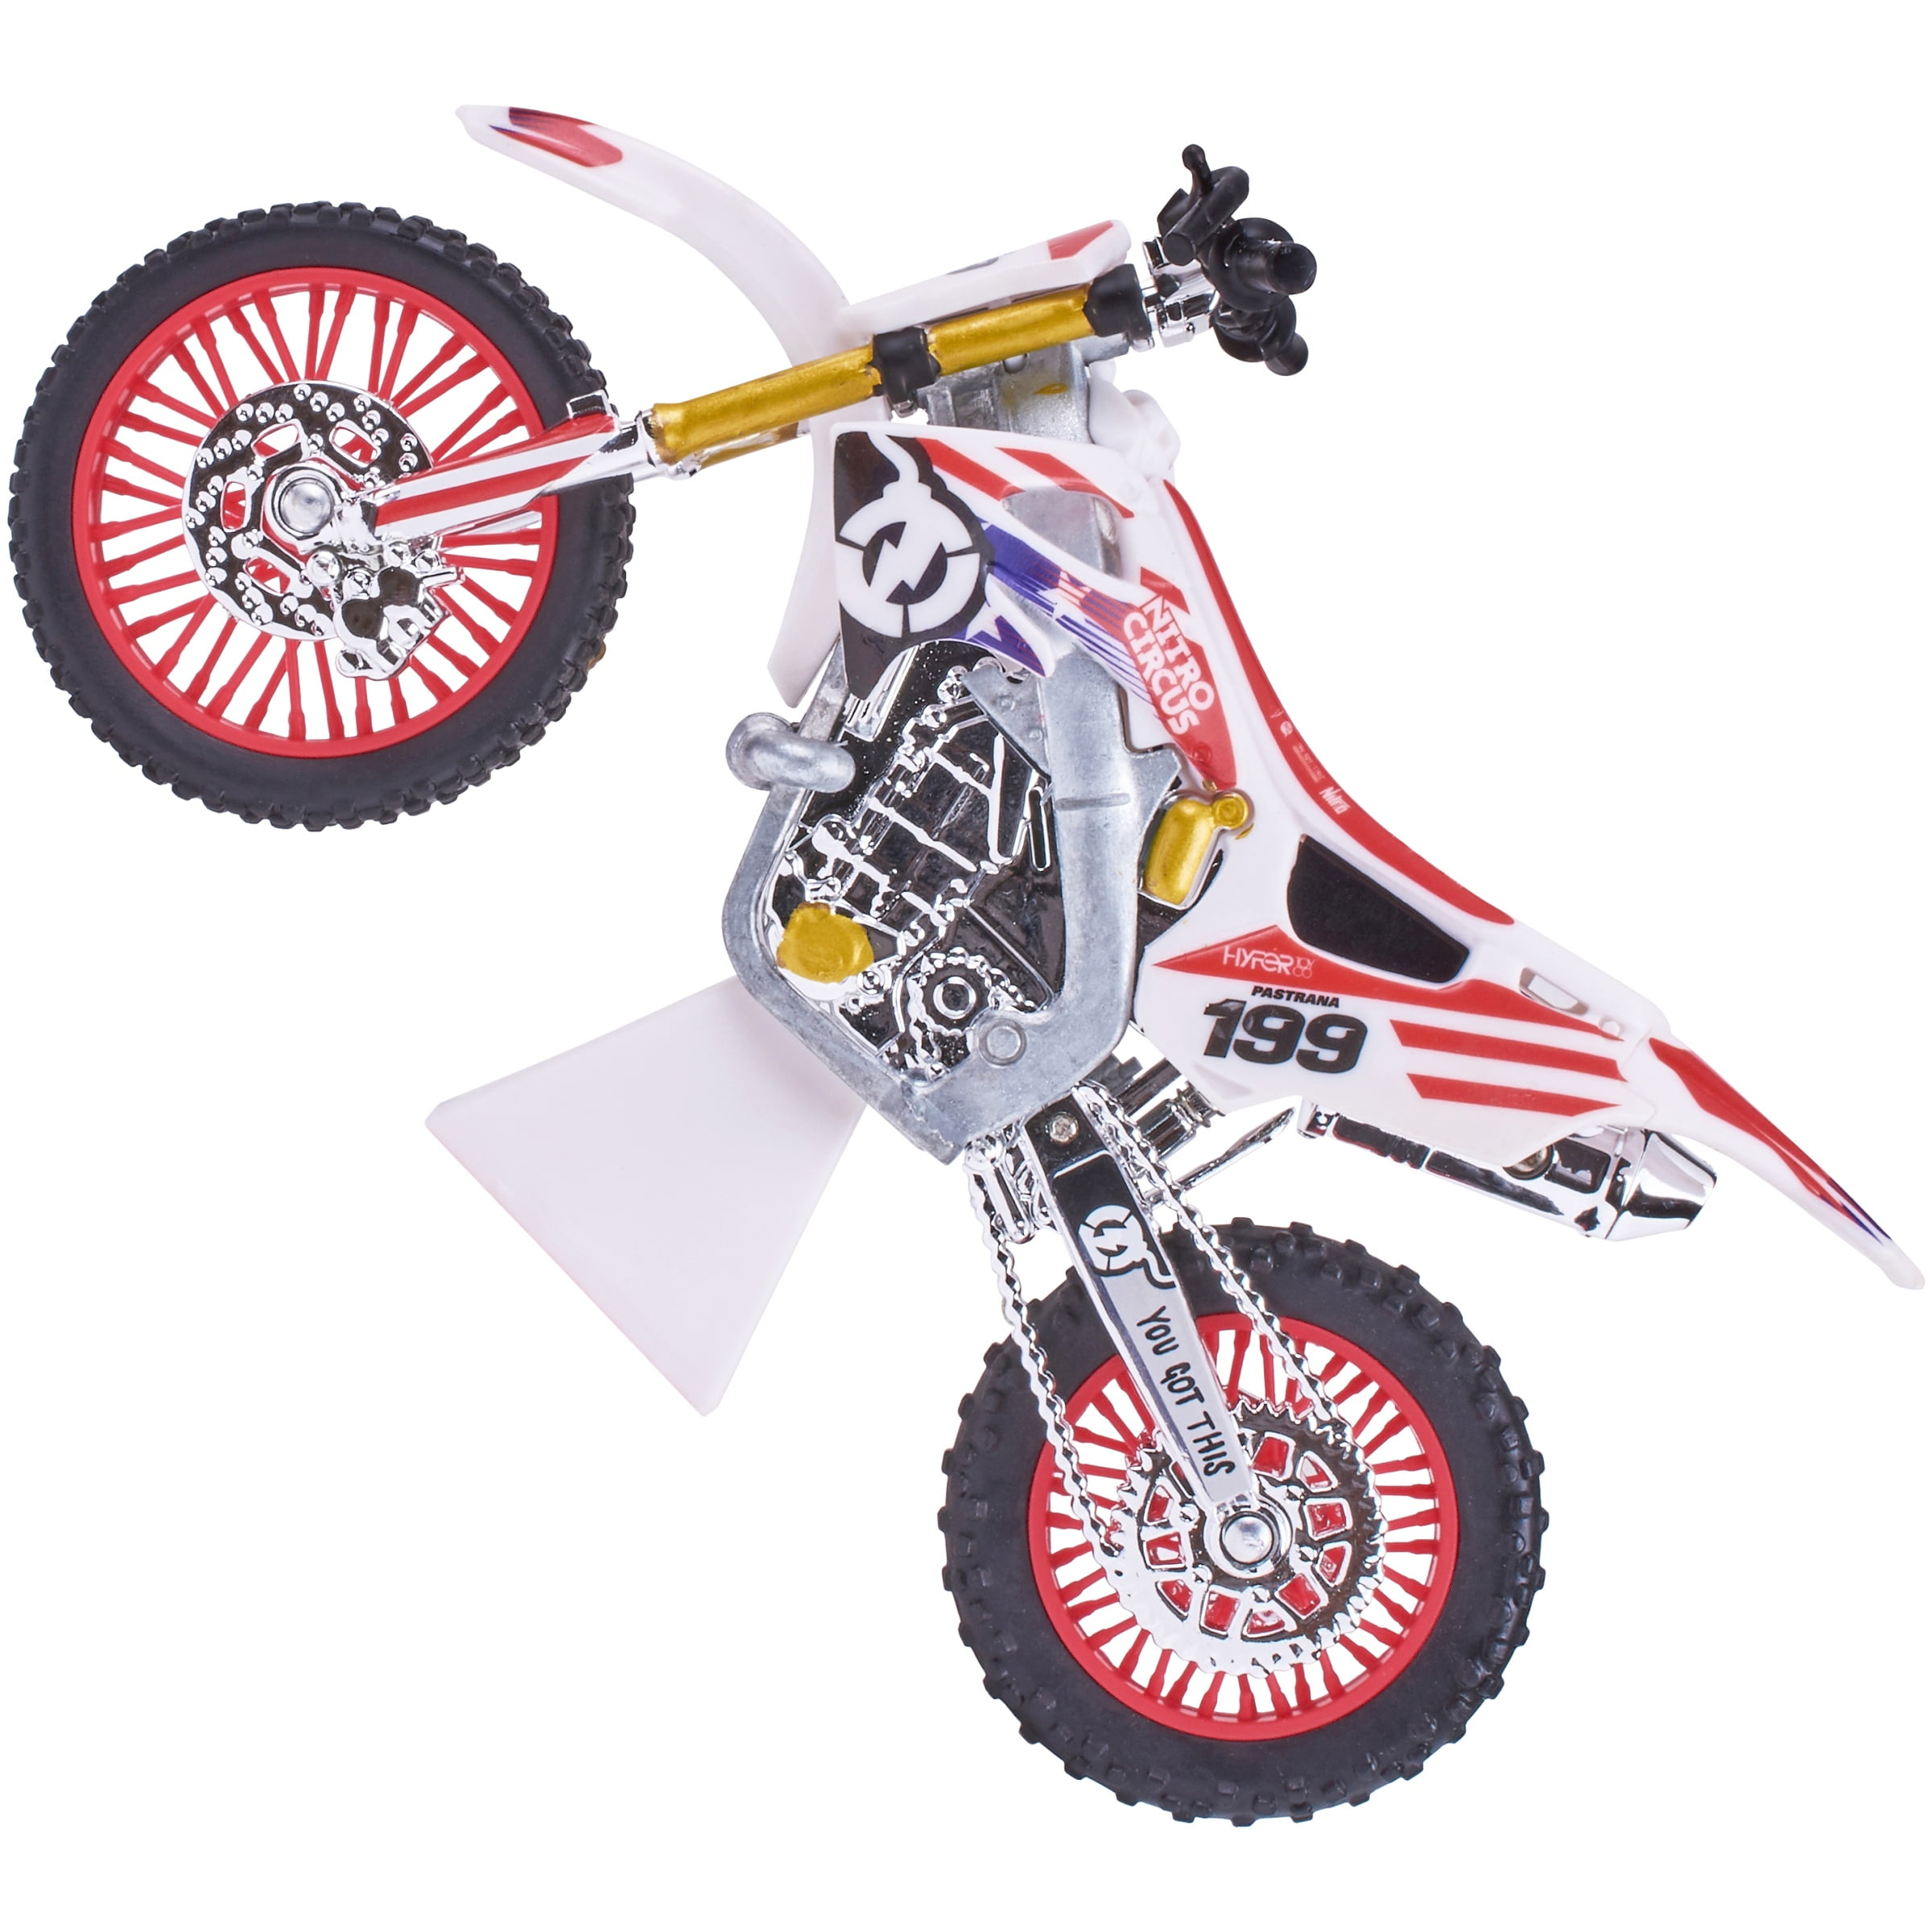 Adventure Force Nitro Circus Dirt Bike with Rider Toy, 1.12 Replica, Nitro  Orange 